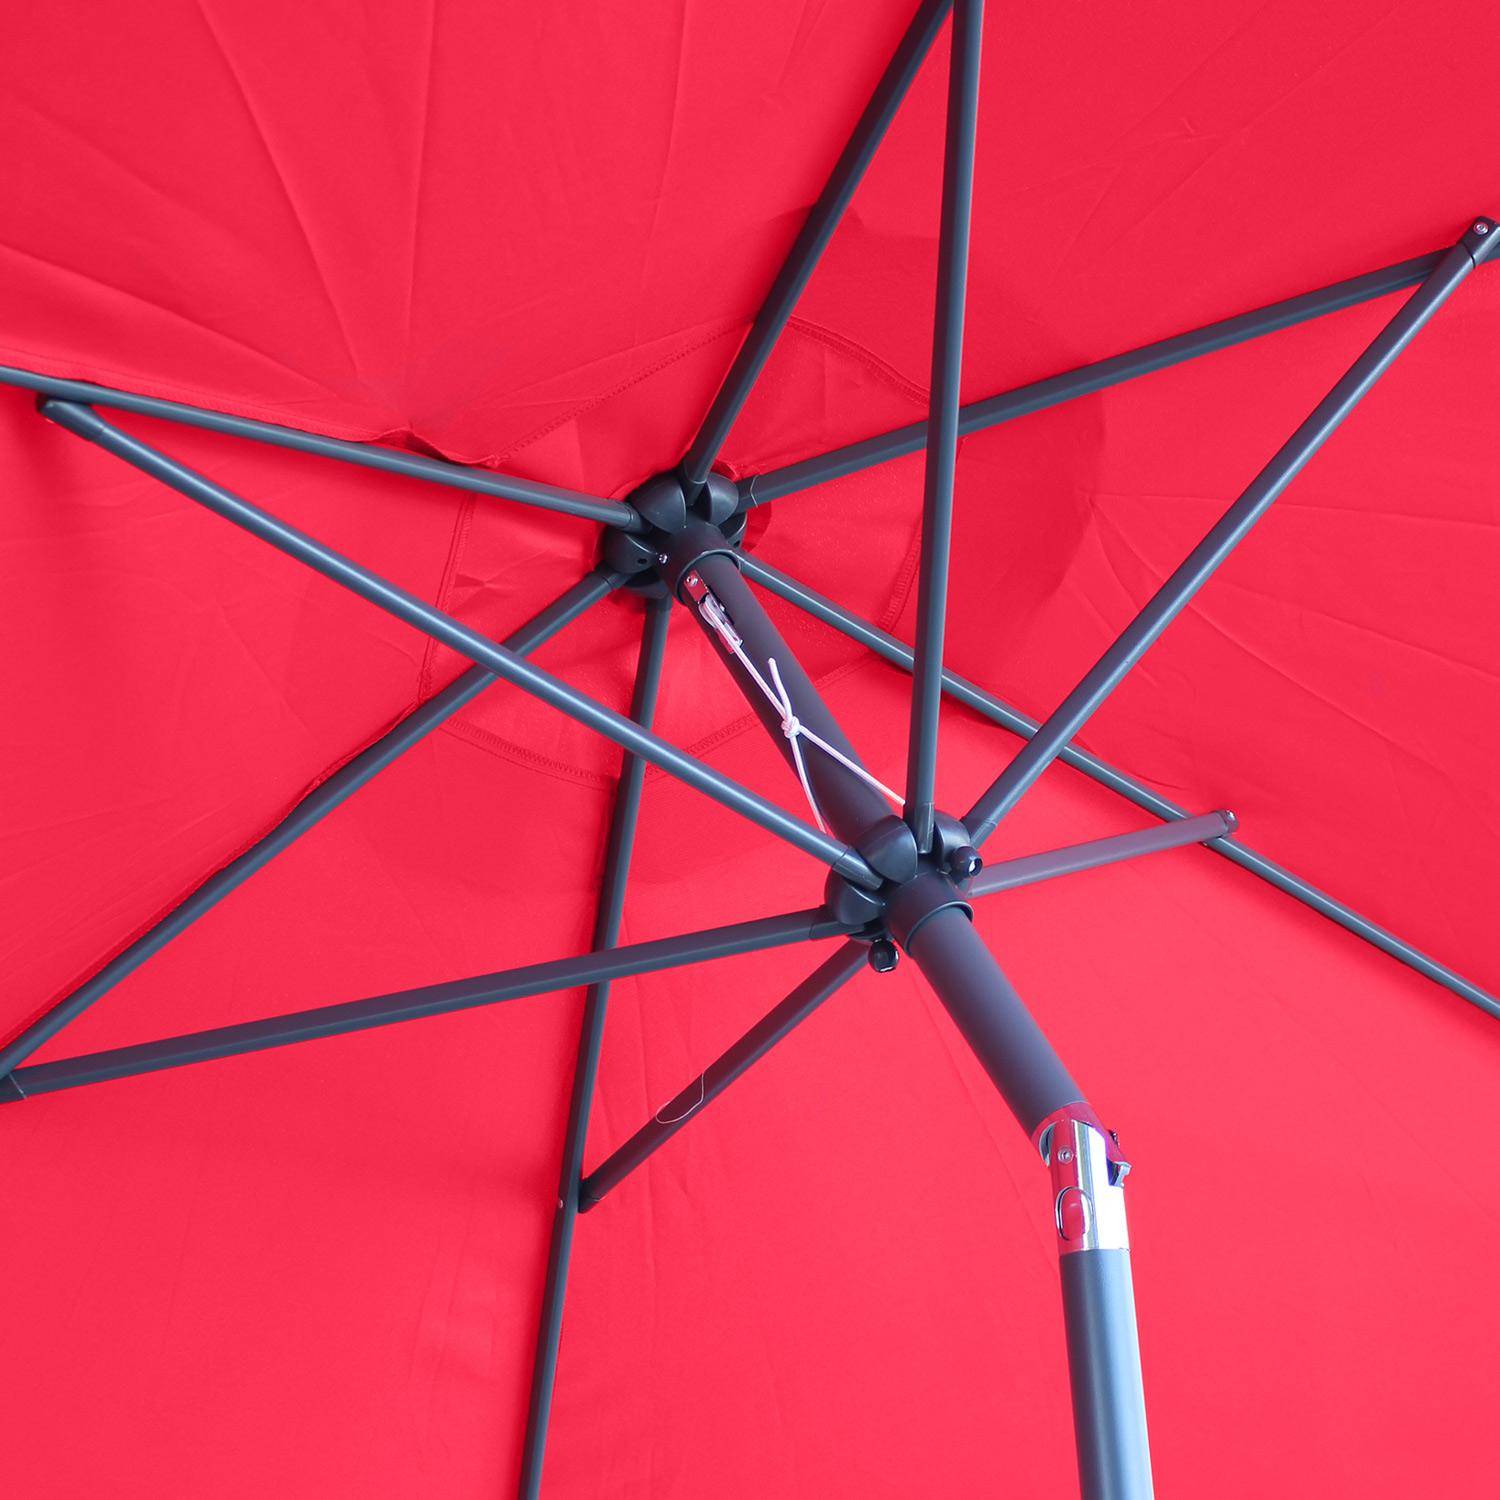 Sombrilla jardin, parasol rojo, mástil central, inclinable, redondo, Ø300cm, Touquet Photo7